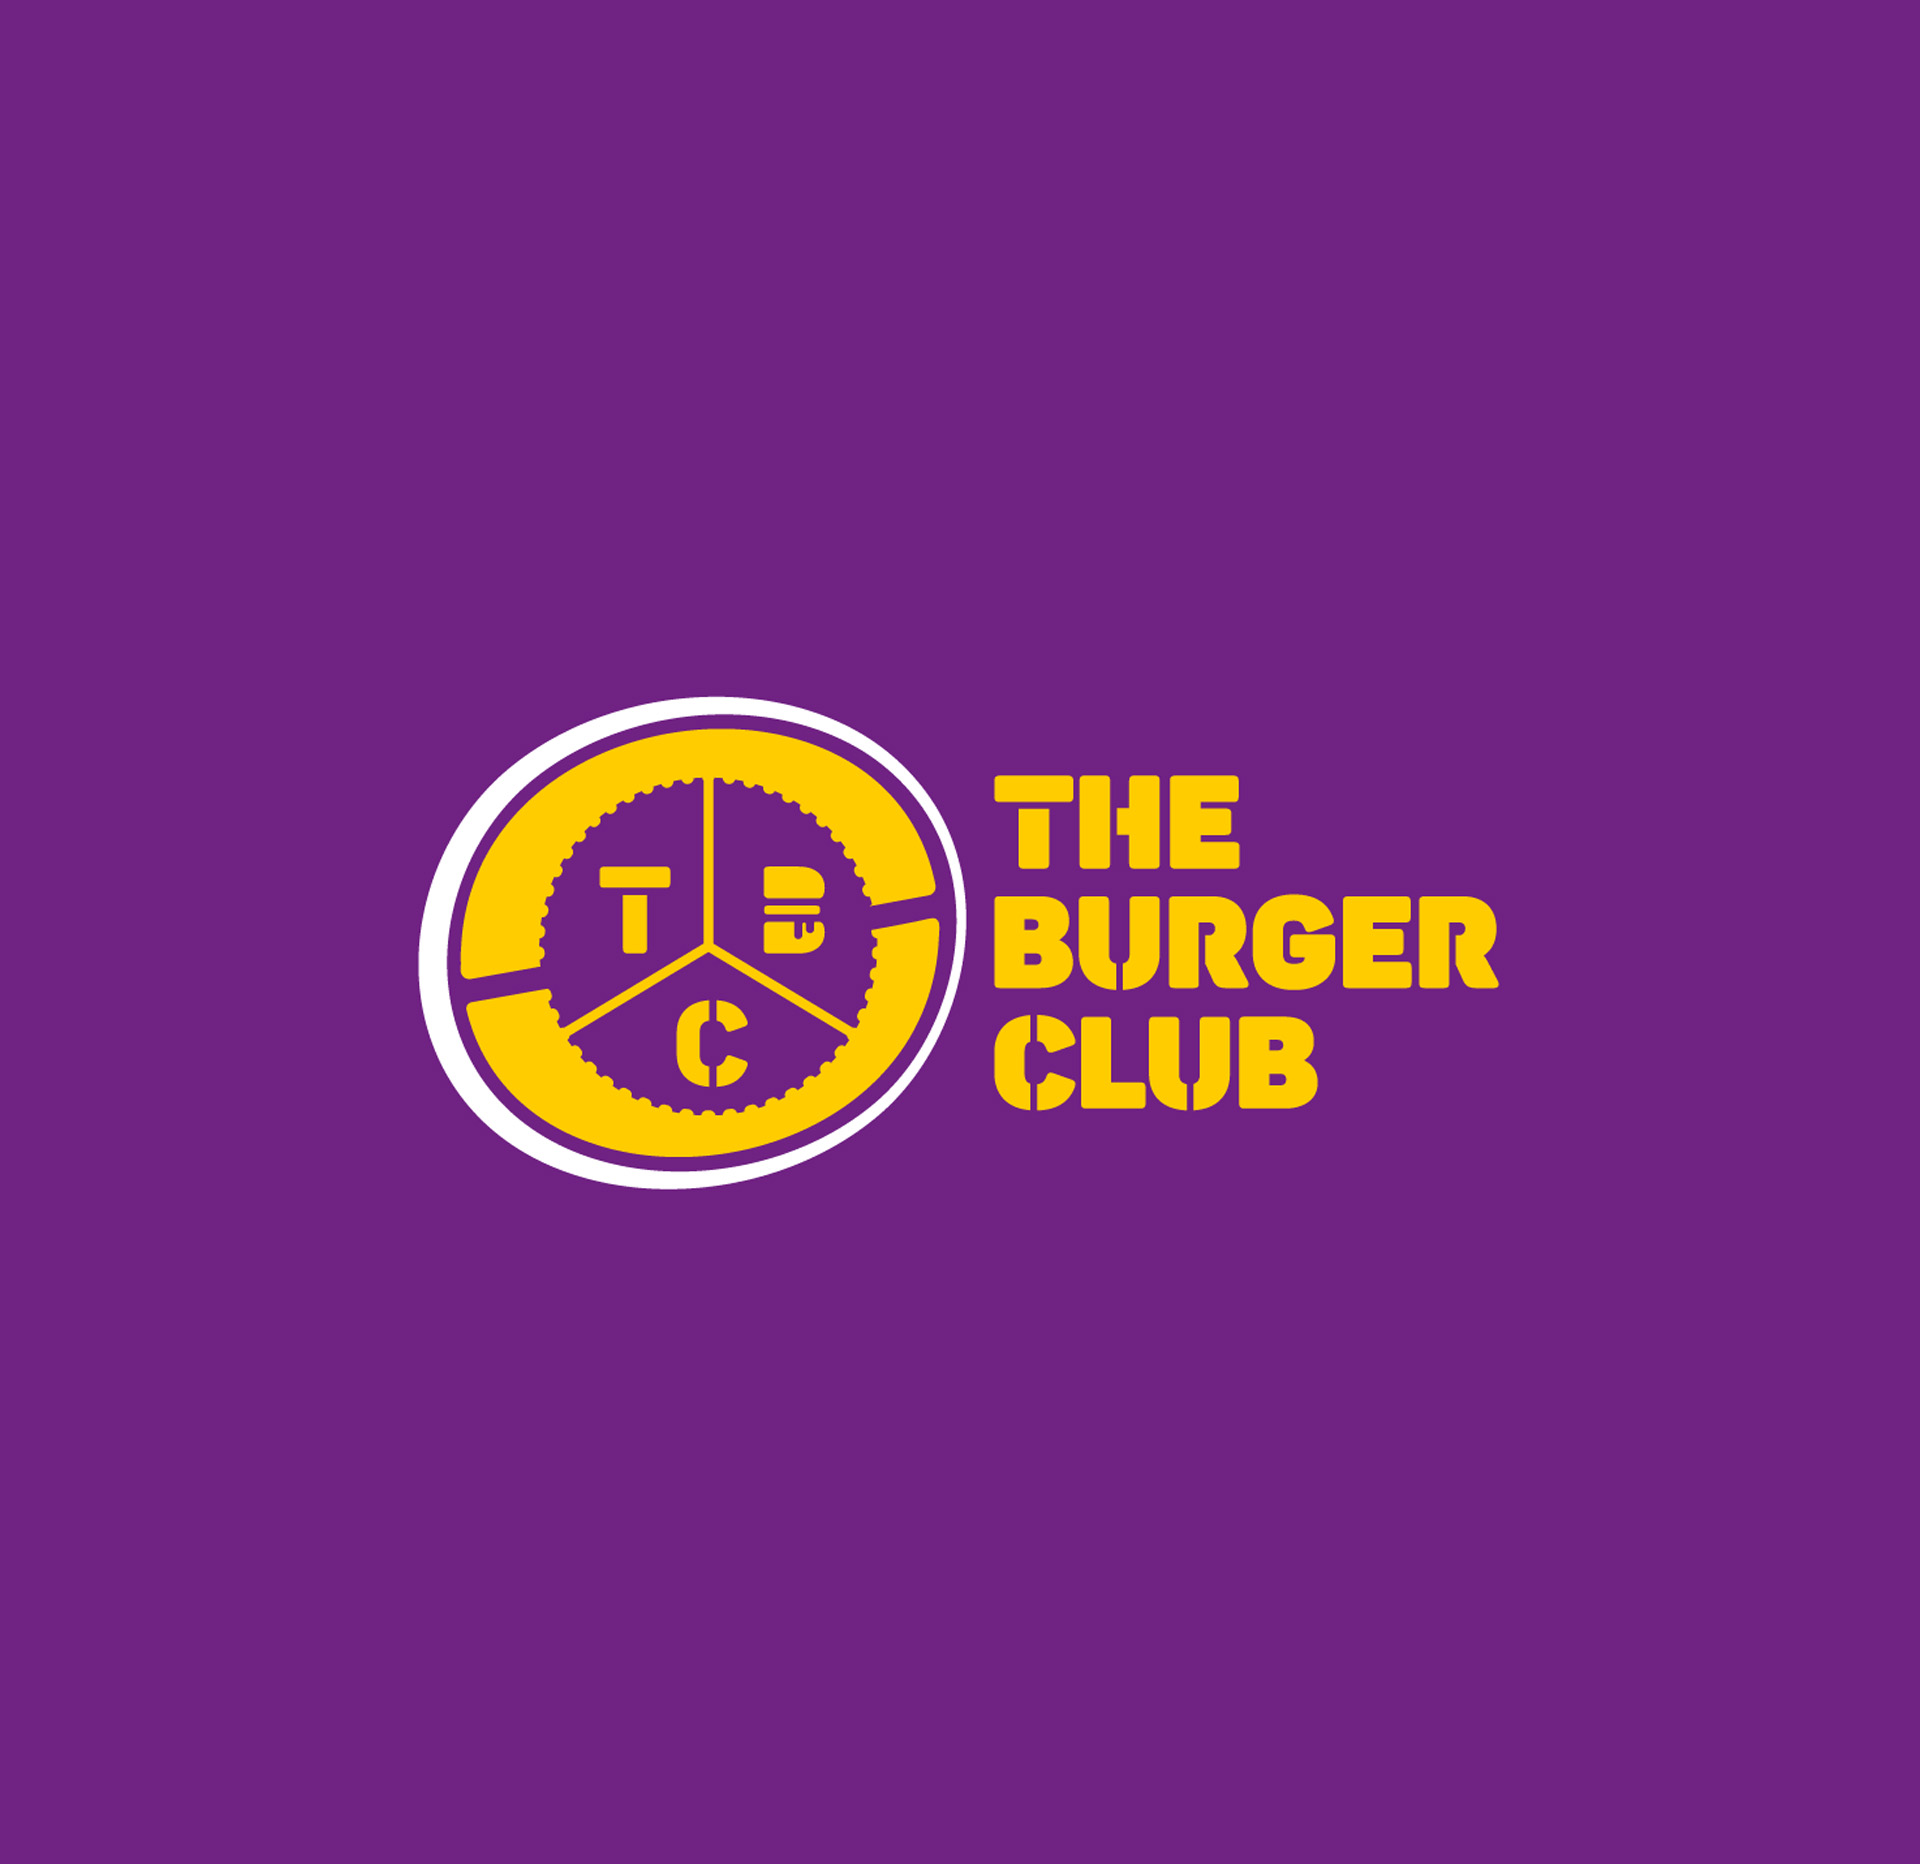 THE BURGER CLUB